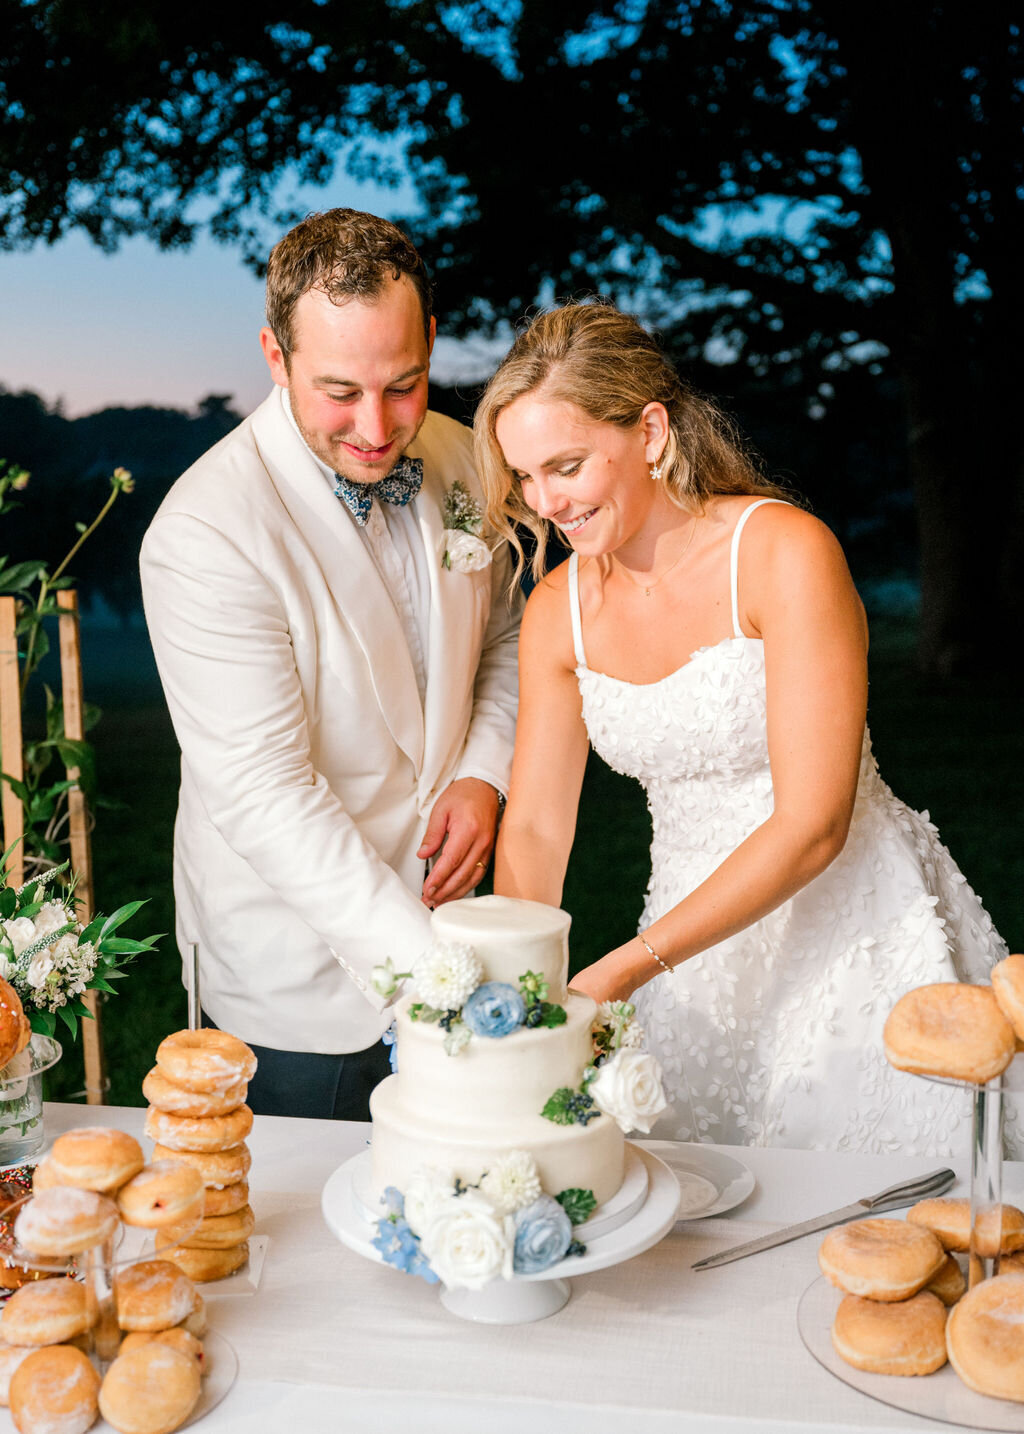 michelle-dunham-photography-cape-cod-wedding-photographer-orleans-smith-estate-tent-reception-cake-cutting-5